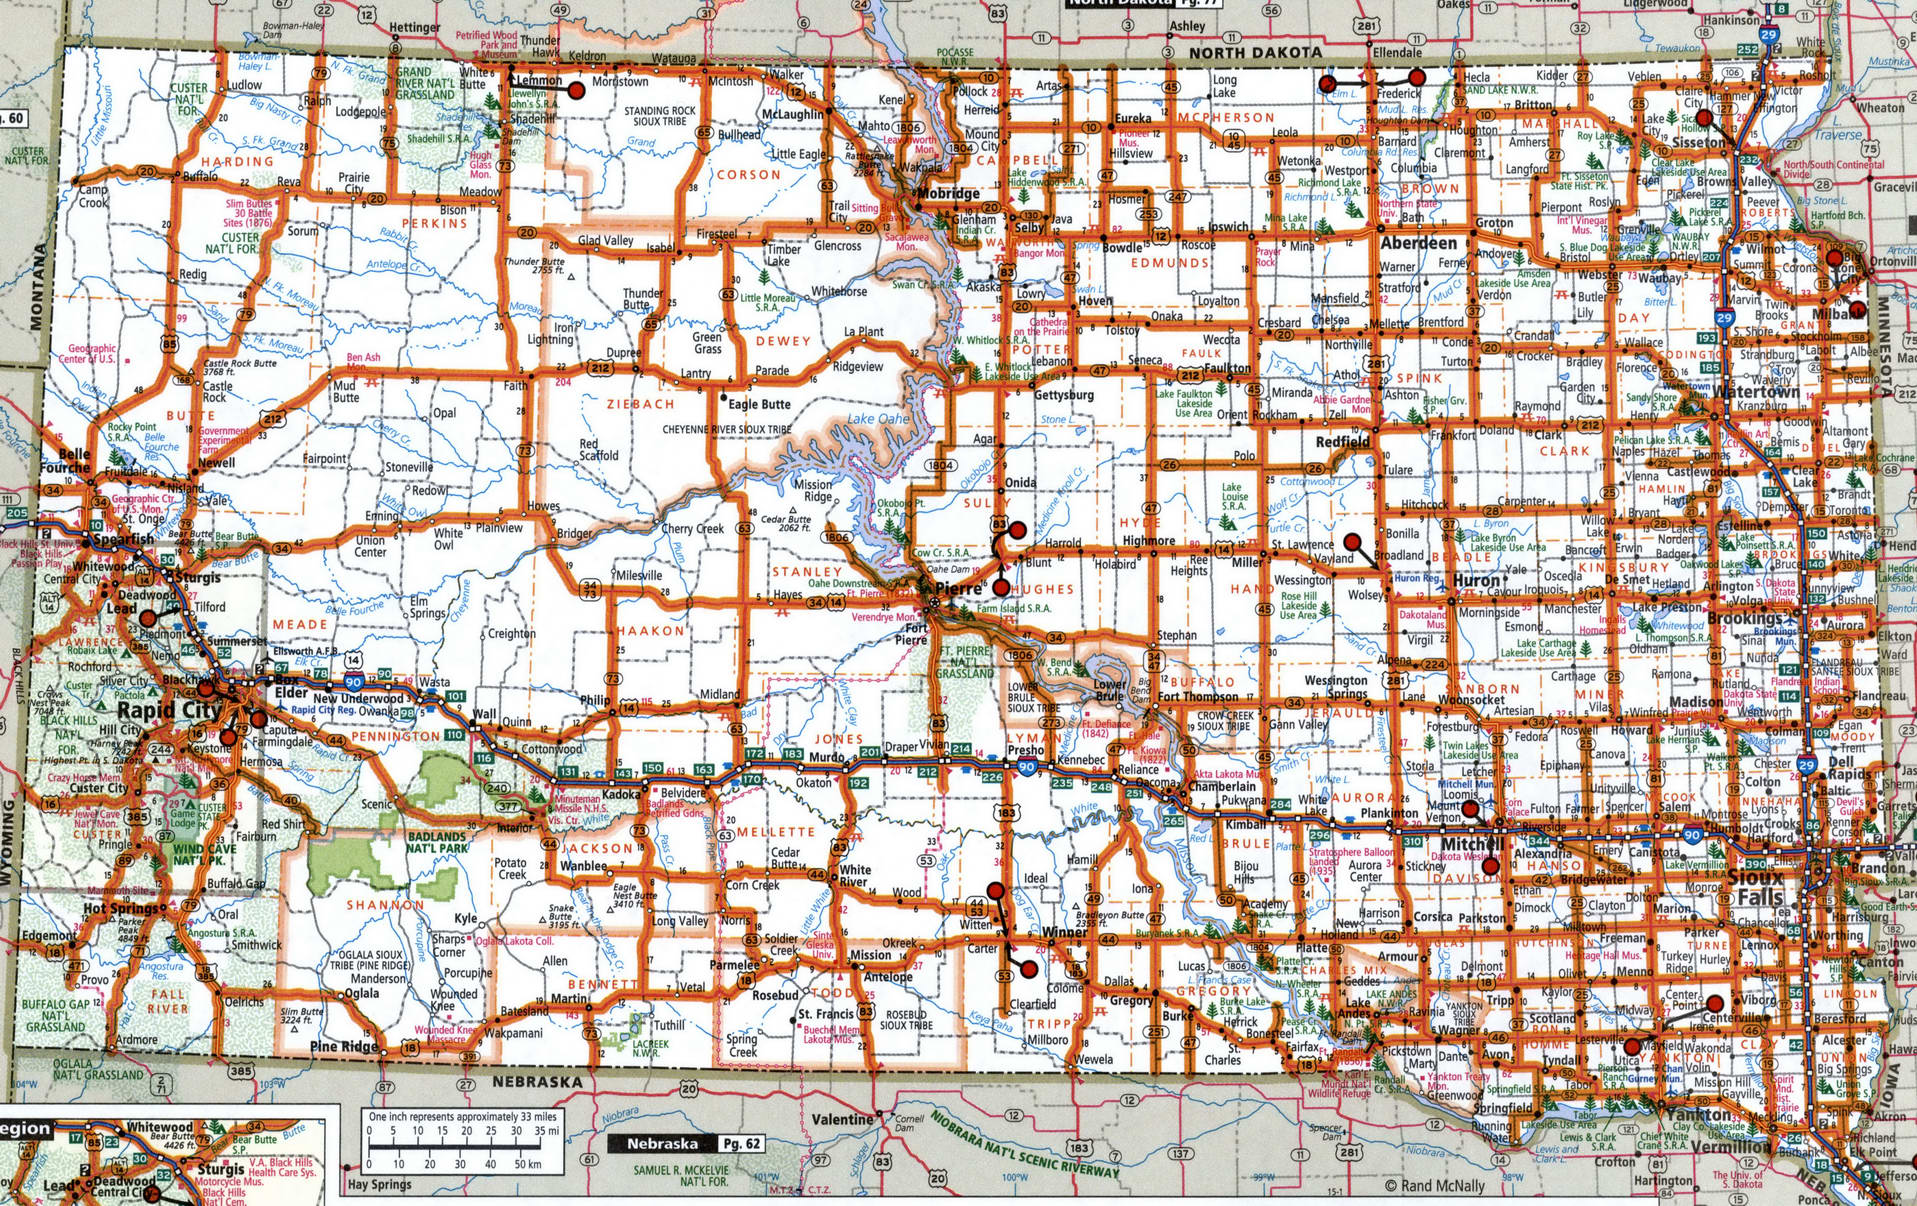 South Dakota map for truckers